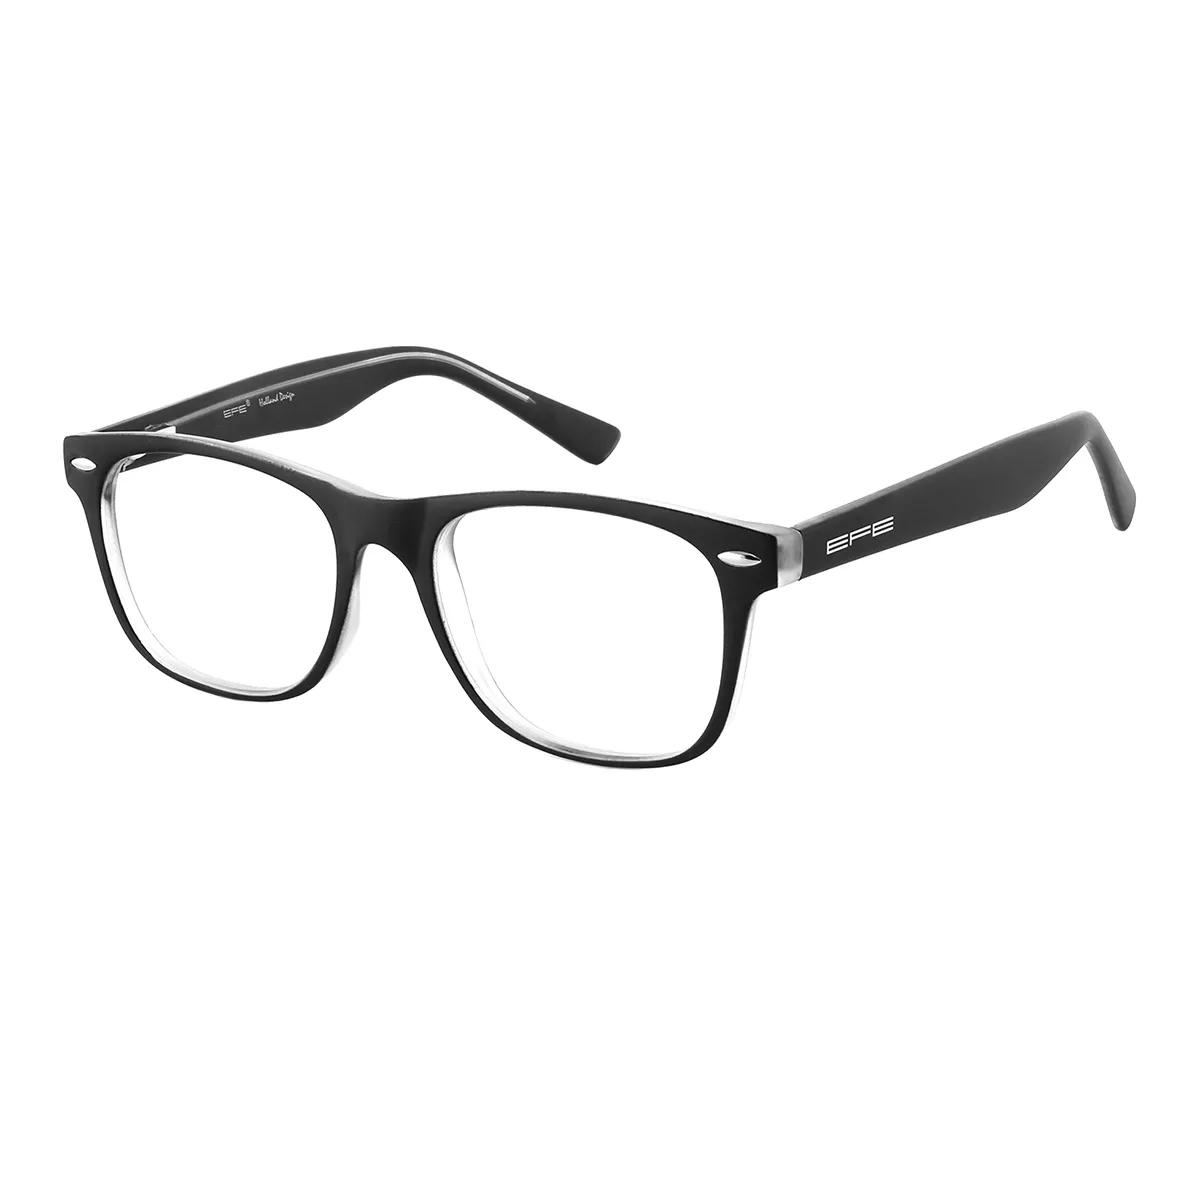 Fashion Square Black-Translucent Glasses for Men & Women